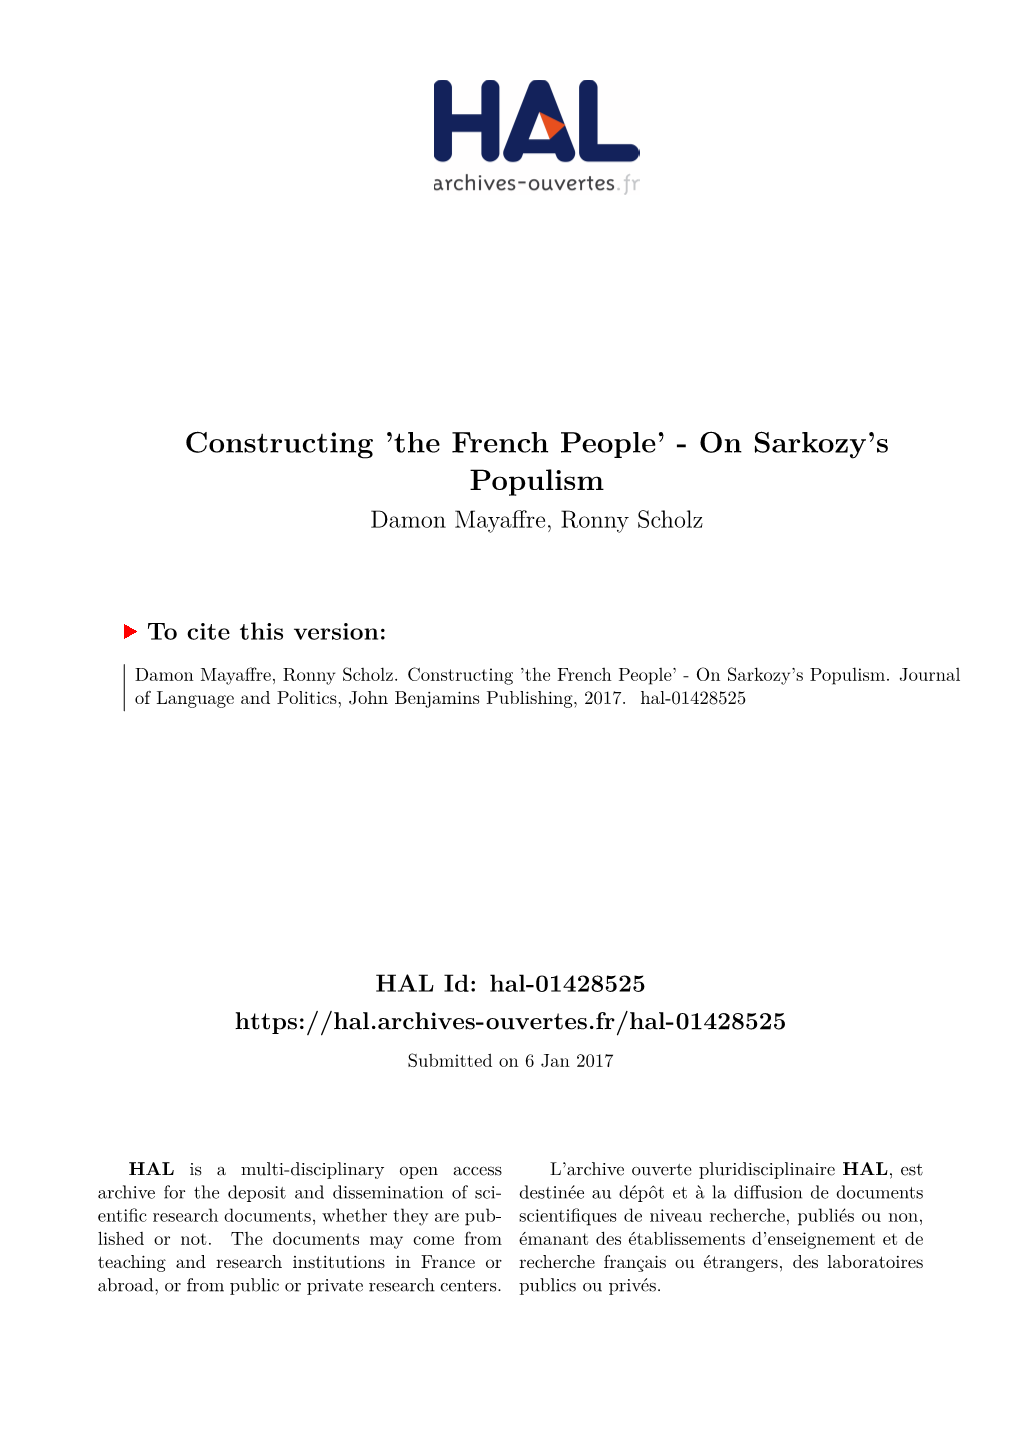 On Sarkozy's Populism